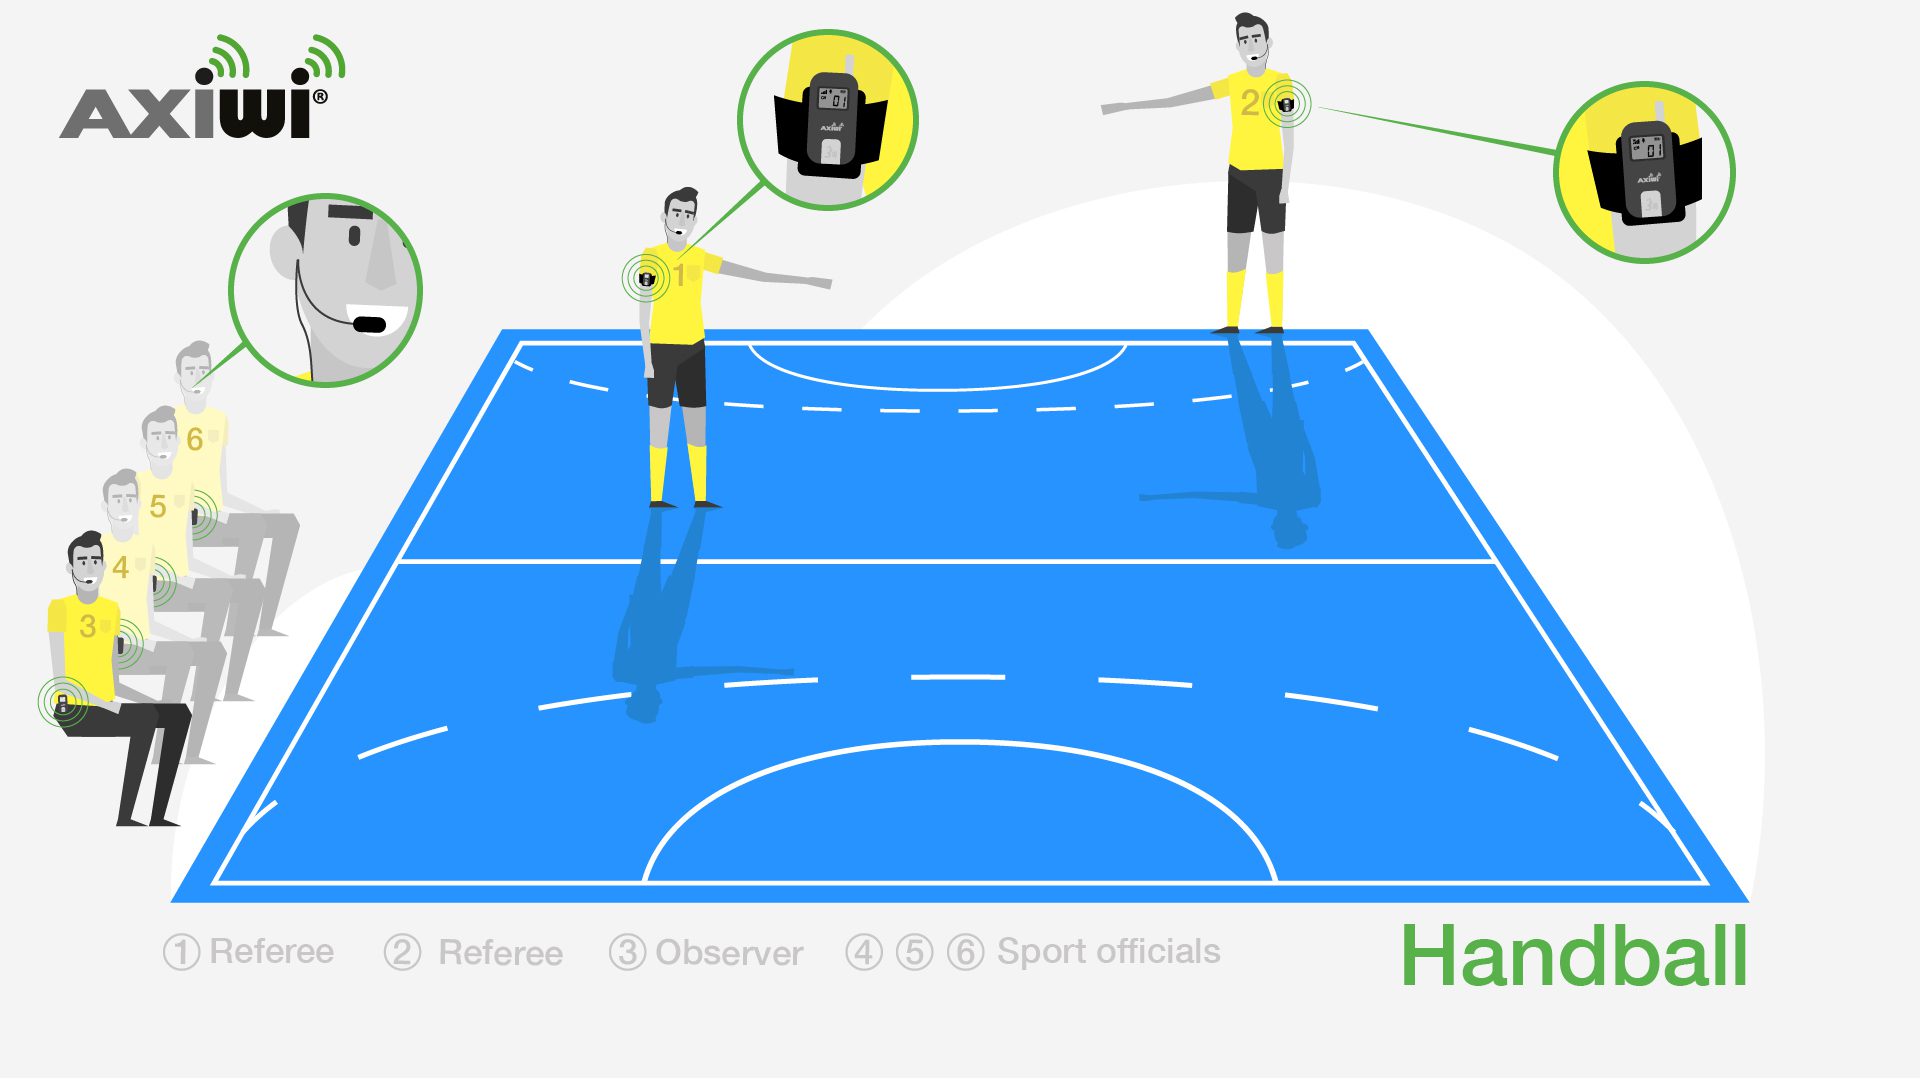 axiwi-communication-system-handball-referees